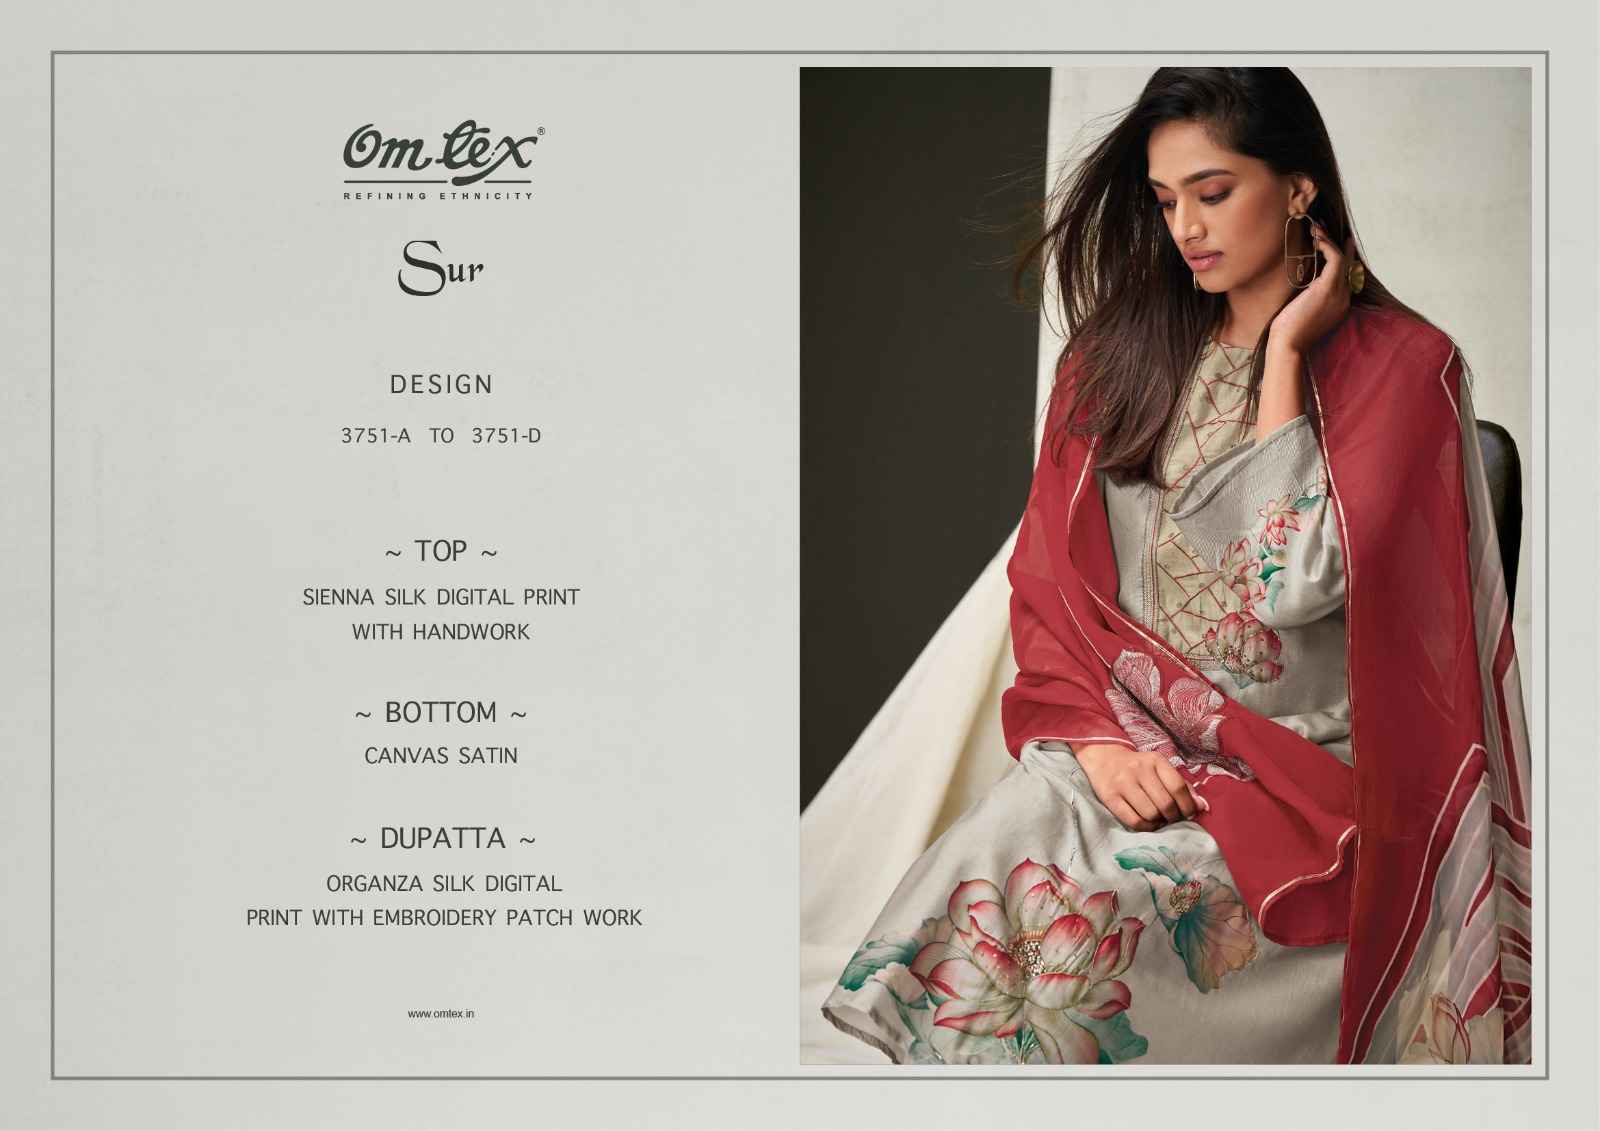 Omtex Sur Sienna Silk Dress Material (4 Pc Catalog)